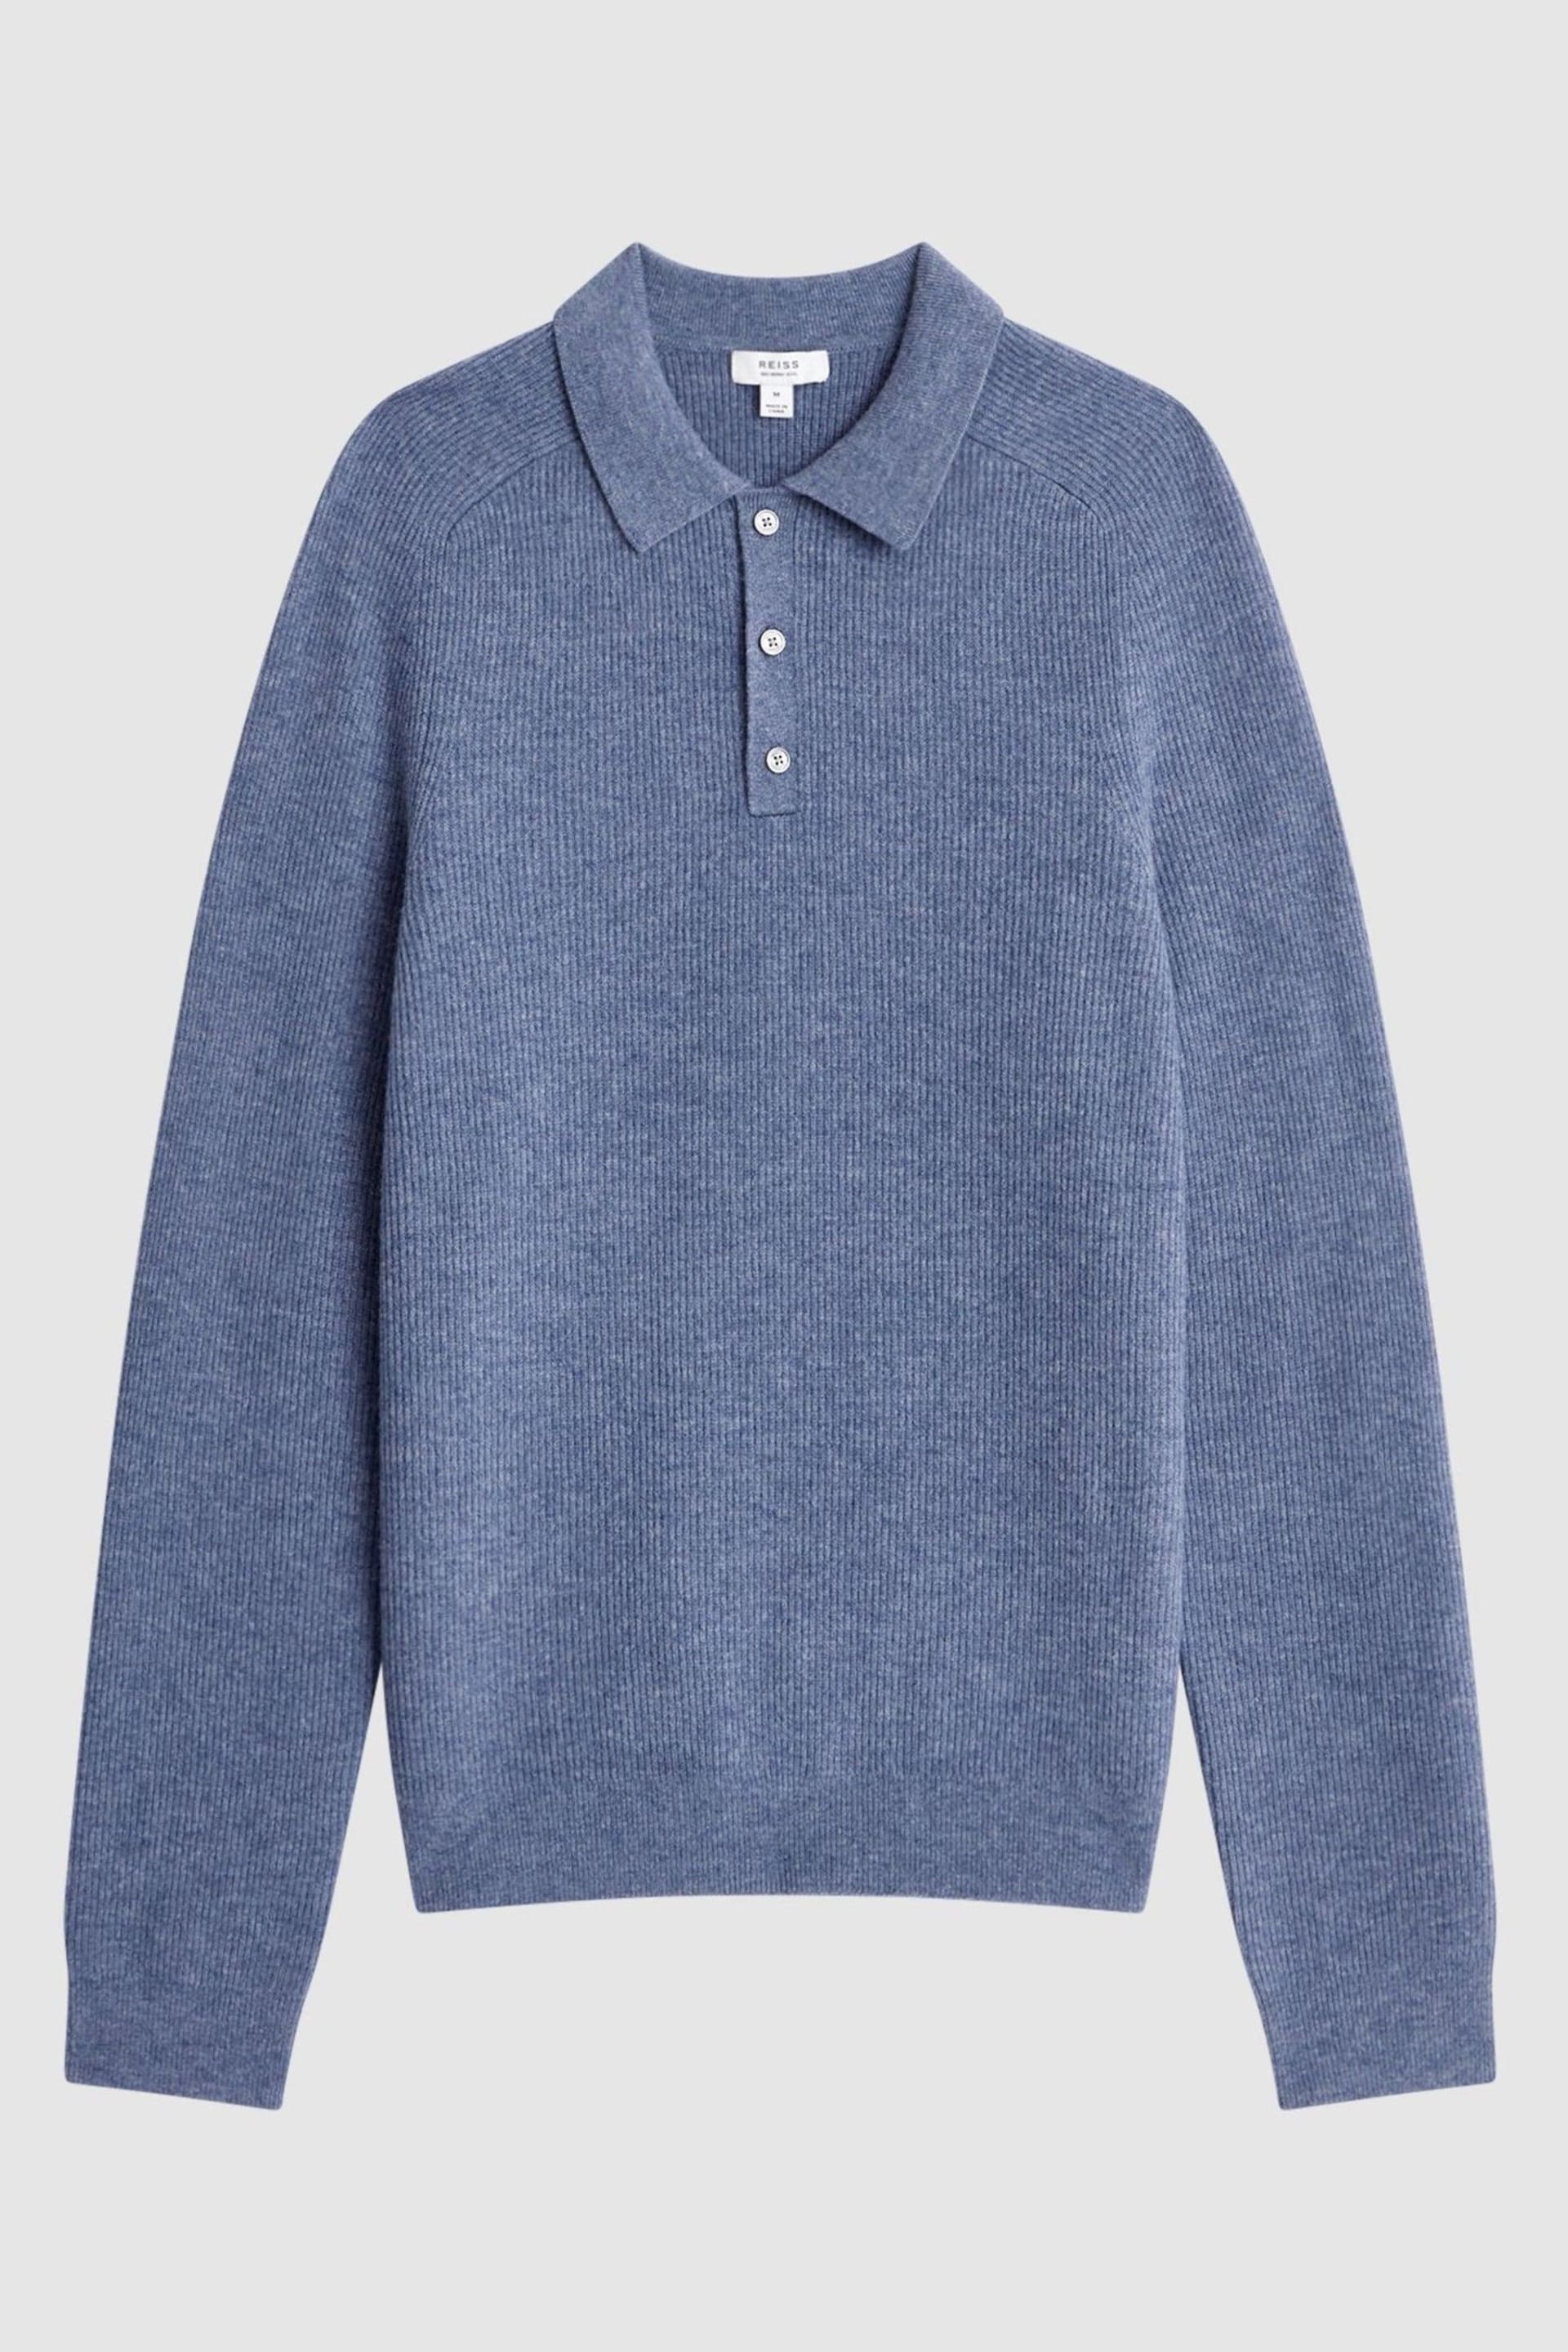 Reiss Blue Melange Holms Wool Long Sleeve Polo Shirt - Image 2 of 4